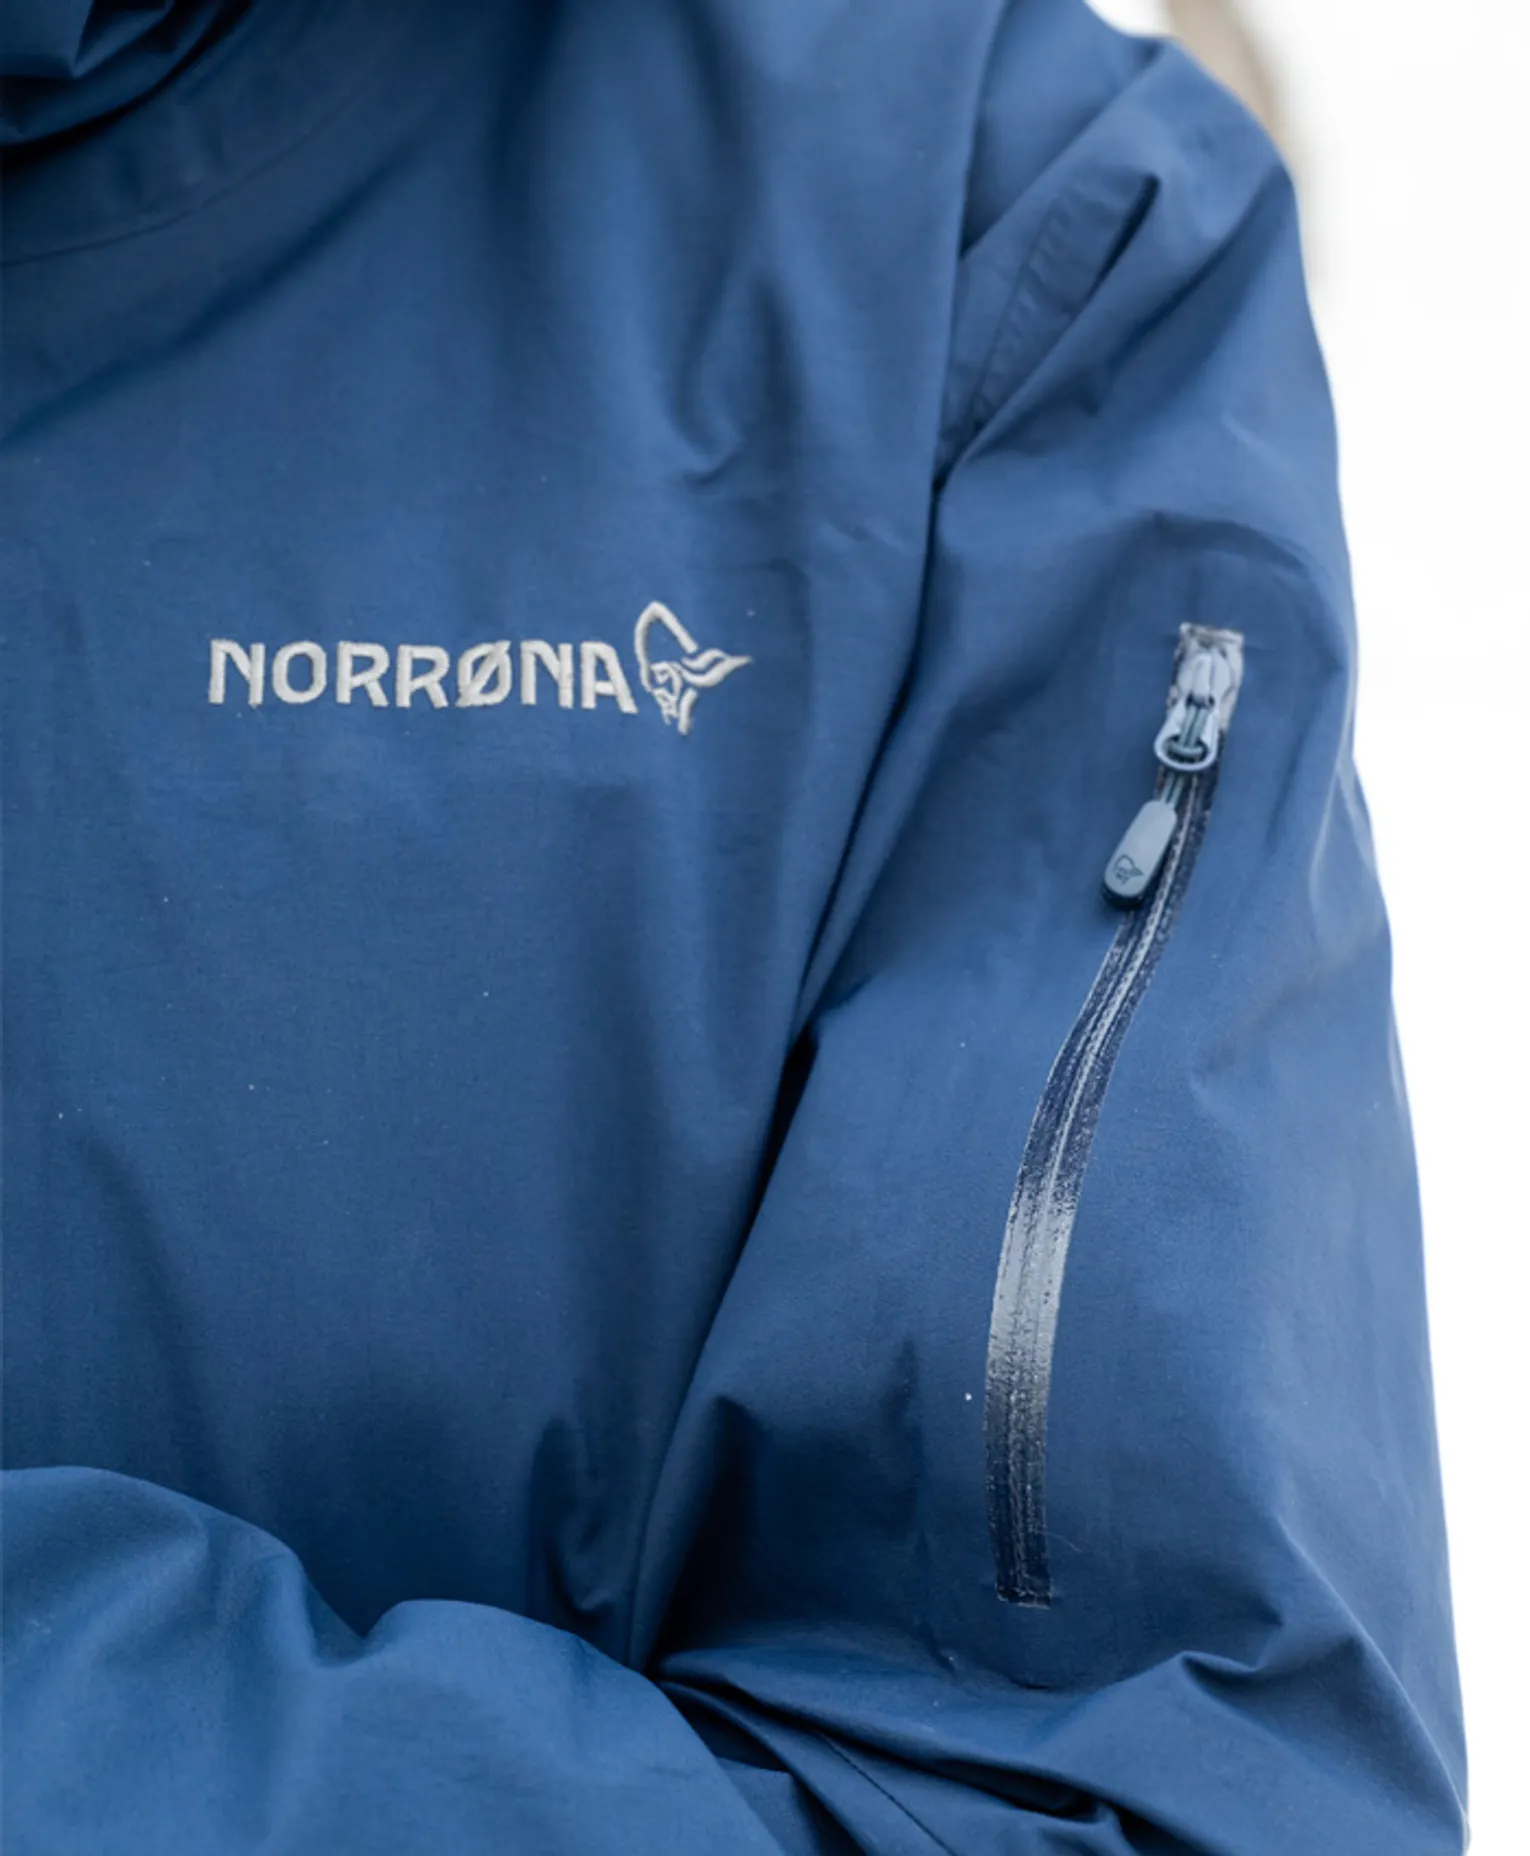 A Review Of The Norrøna Lofoten Hiloflex 200 Jacket - Me And My Jackets